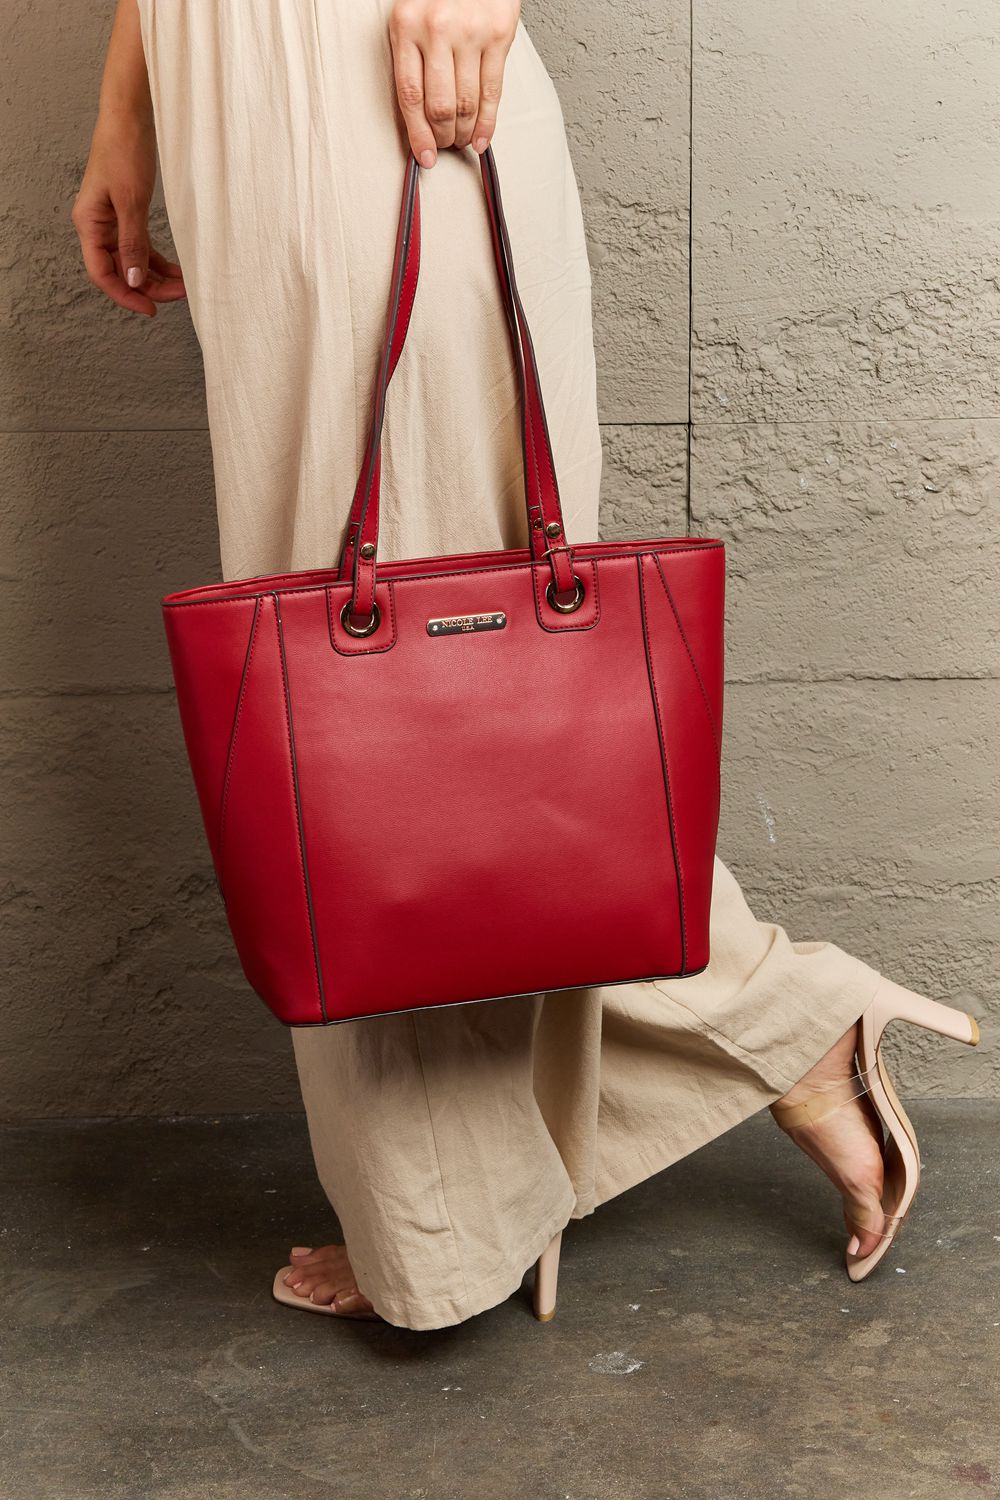 Nicole Lee USA Dakota 3-Piece Handbag Set - TiffanyzKlozet